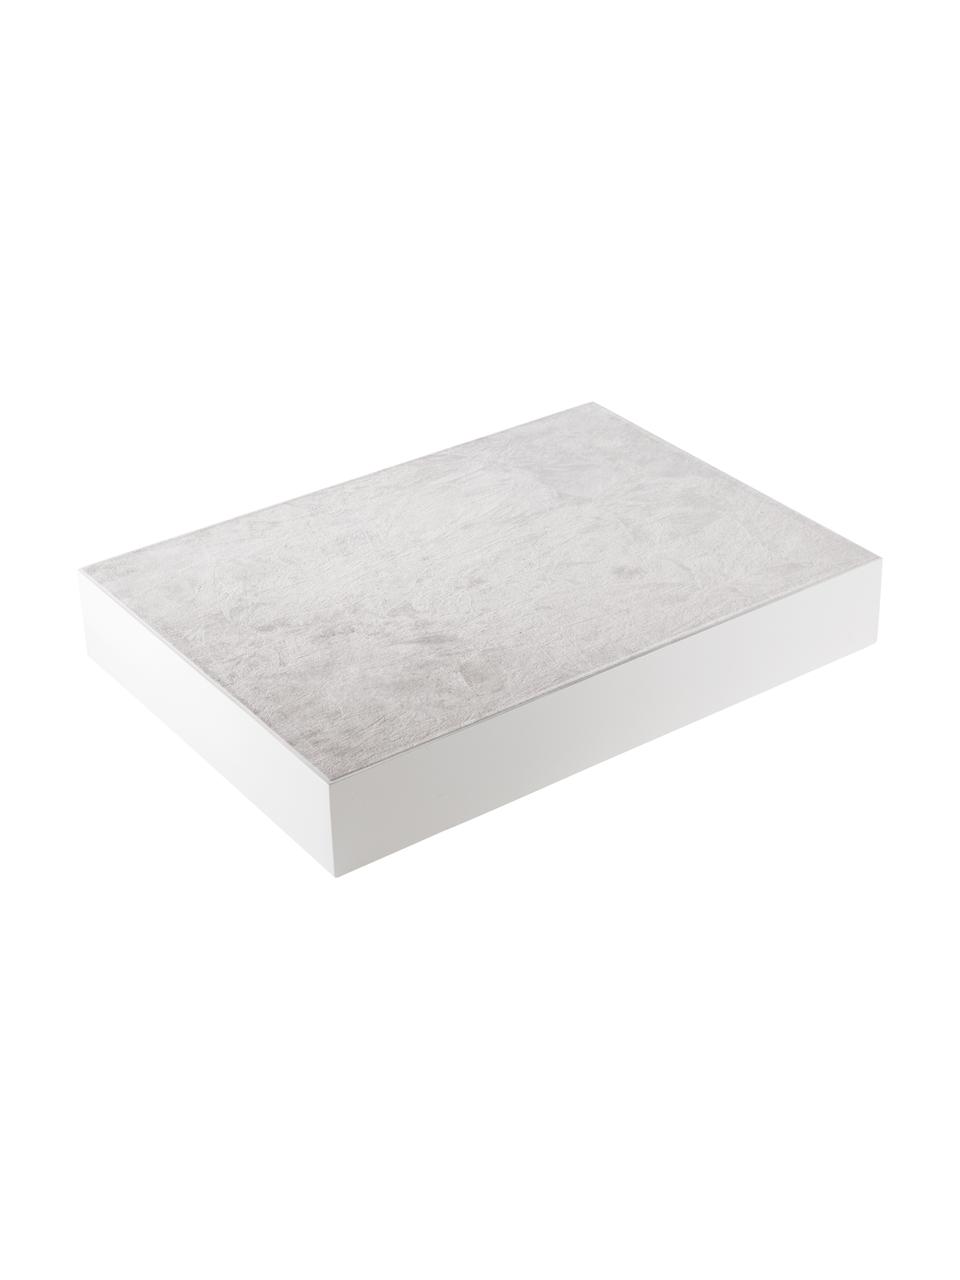 Hoogglans dienblad Hayley in wit, Dienblad: MDF, vijflagig gelakt, Onderzijde: fluweel, Wit, B 50 x D 35 cm